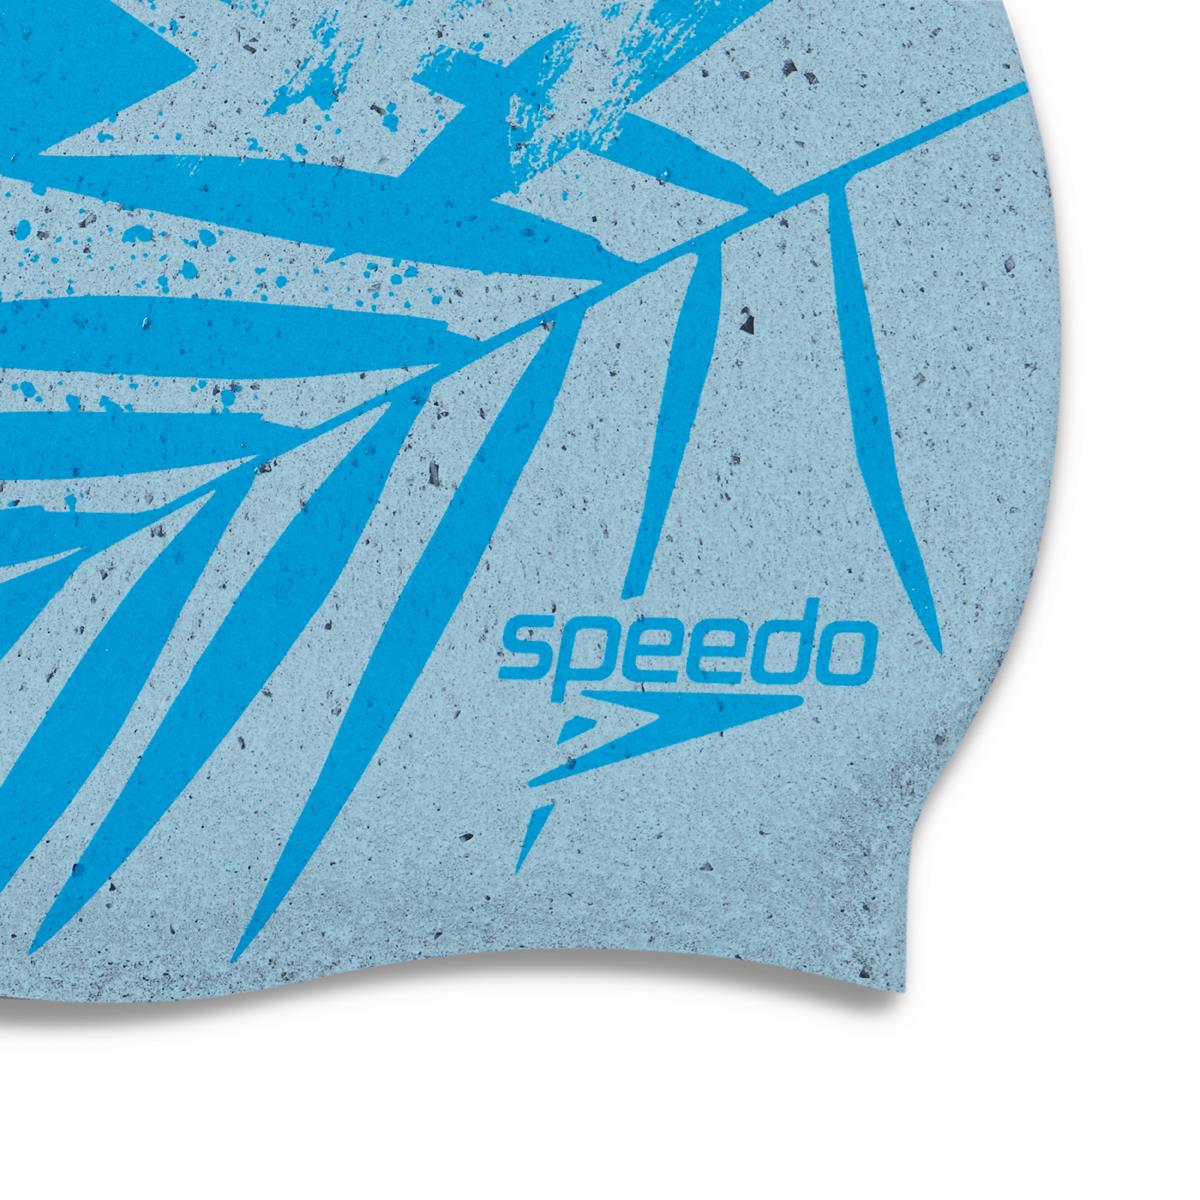 New Speedo Swimwear Collection | Latest Suits | ProSwimwear